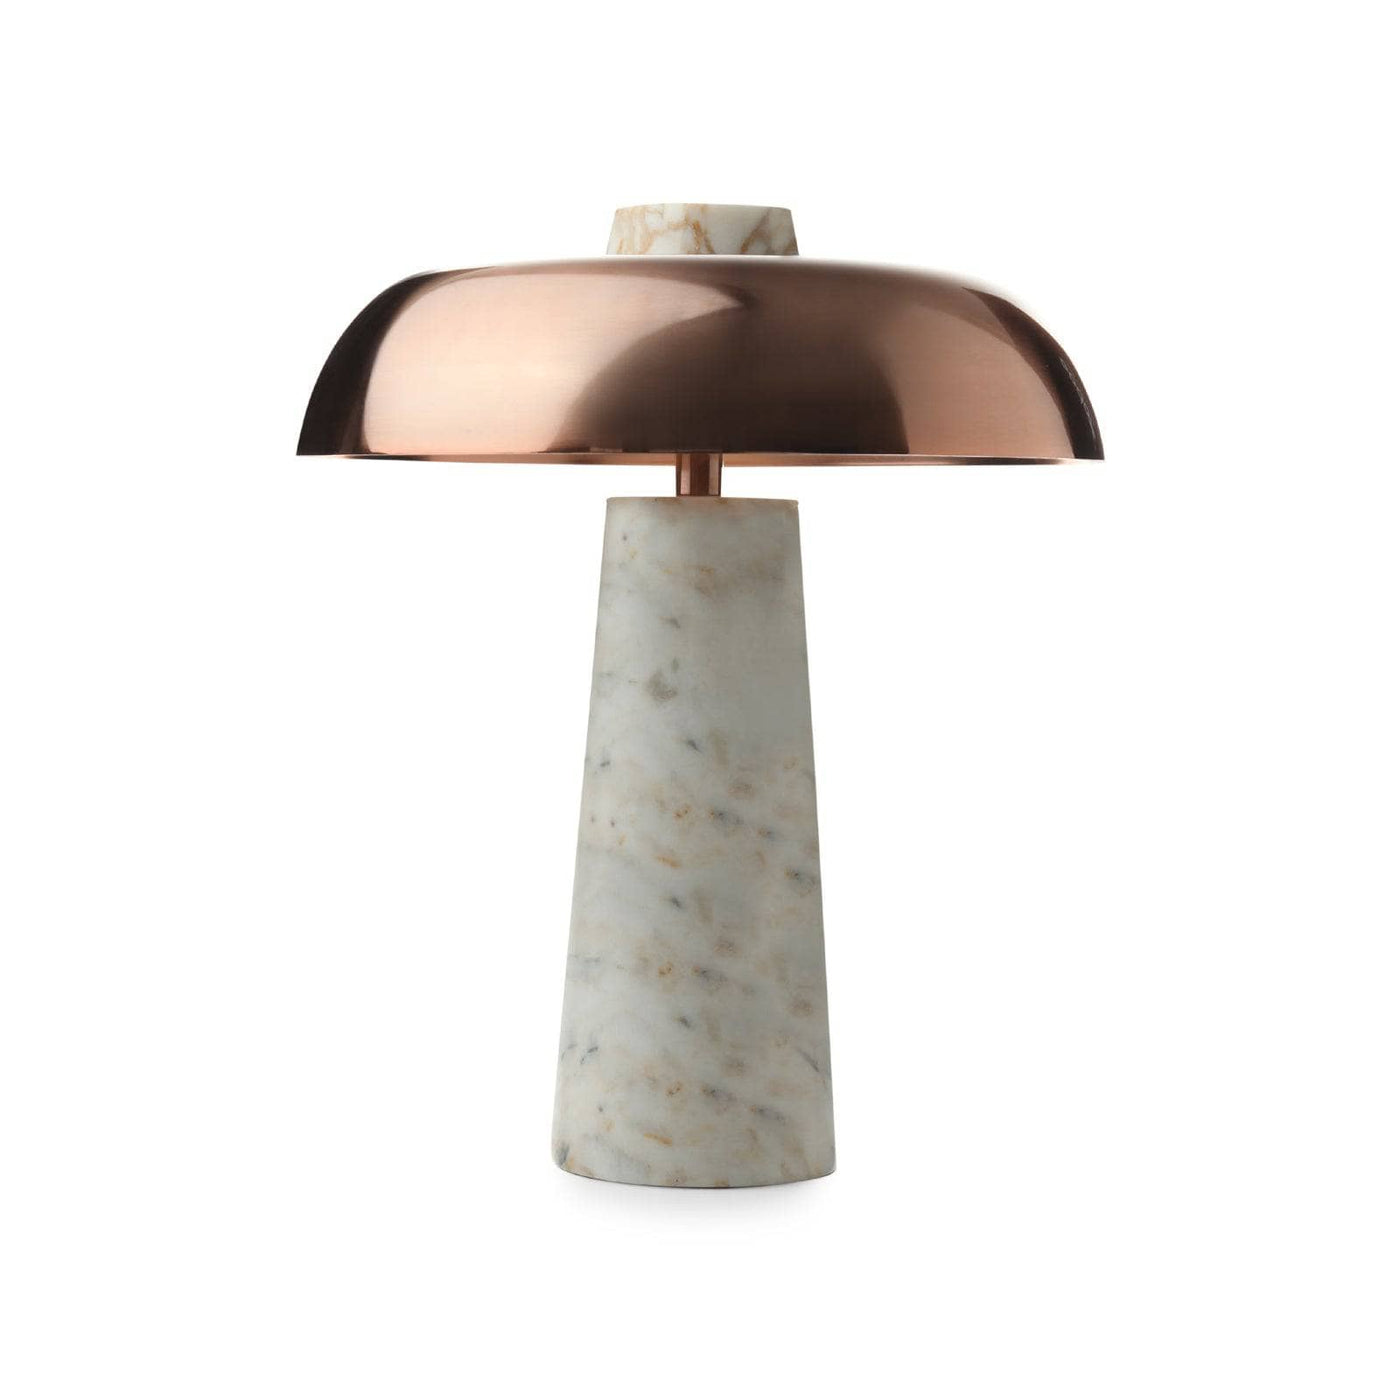 Mushroom Marble Table Lamp, Beige Table & Bedside Lamps sazy.com